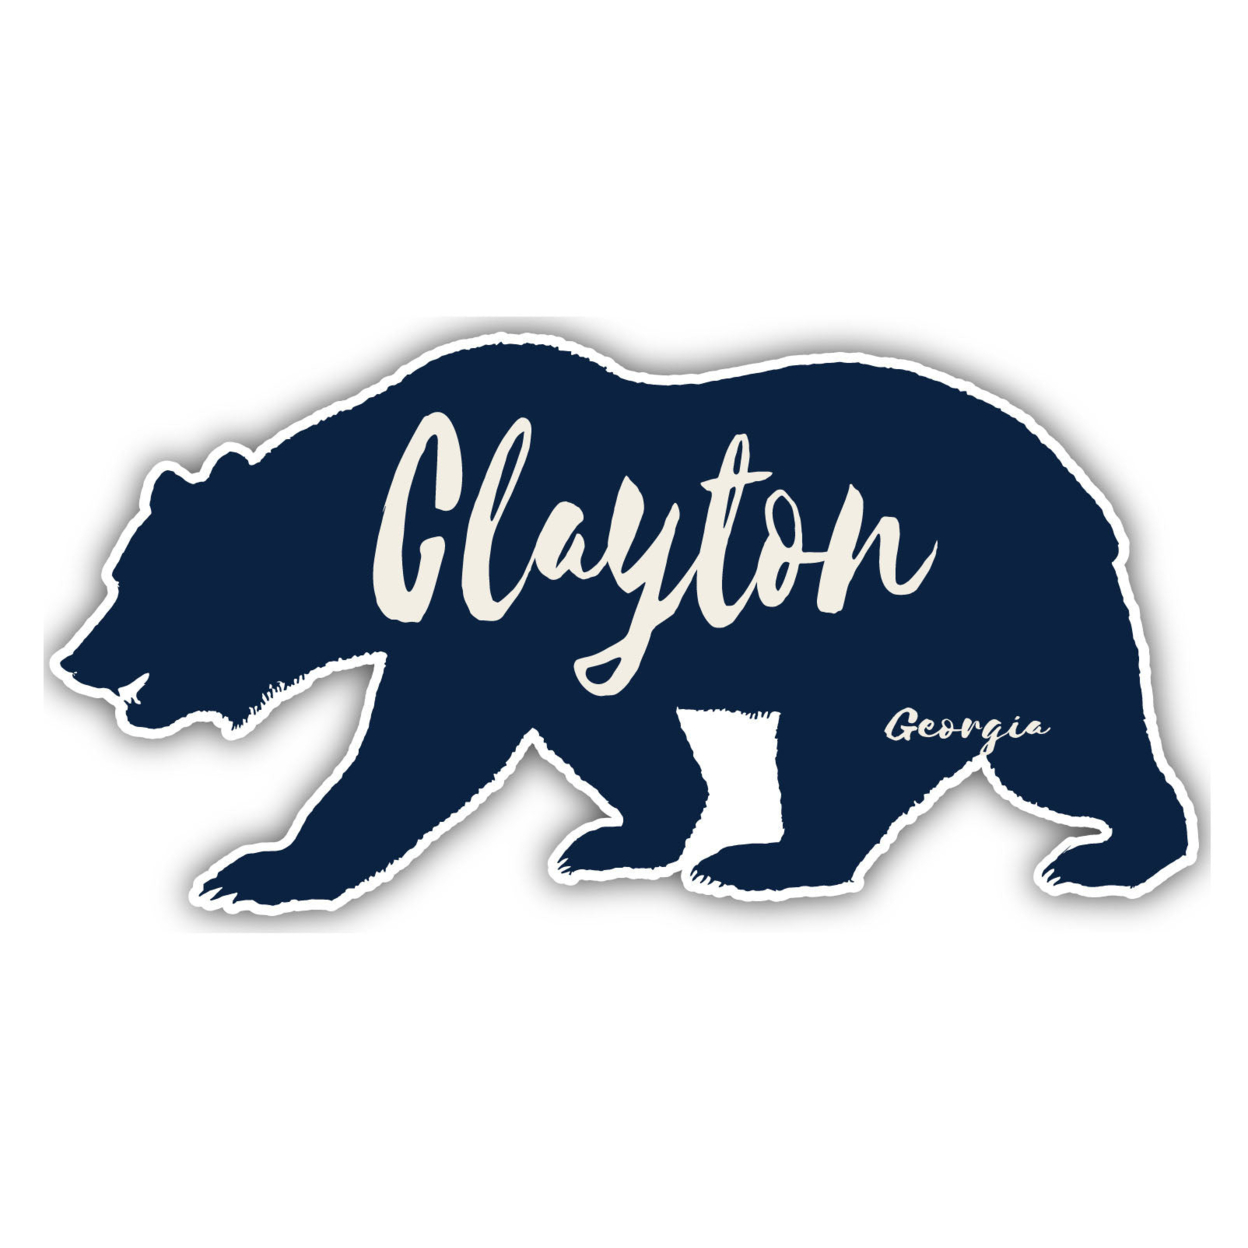 Clayton Georgia Souvenir Decorative Stickers (Choose Theme And Size) - Single Unit, 4-Inch, Bear